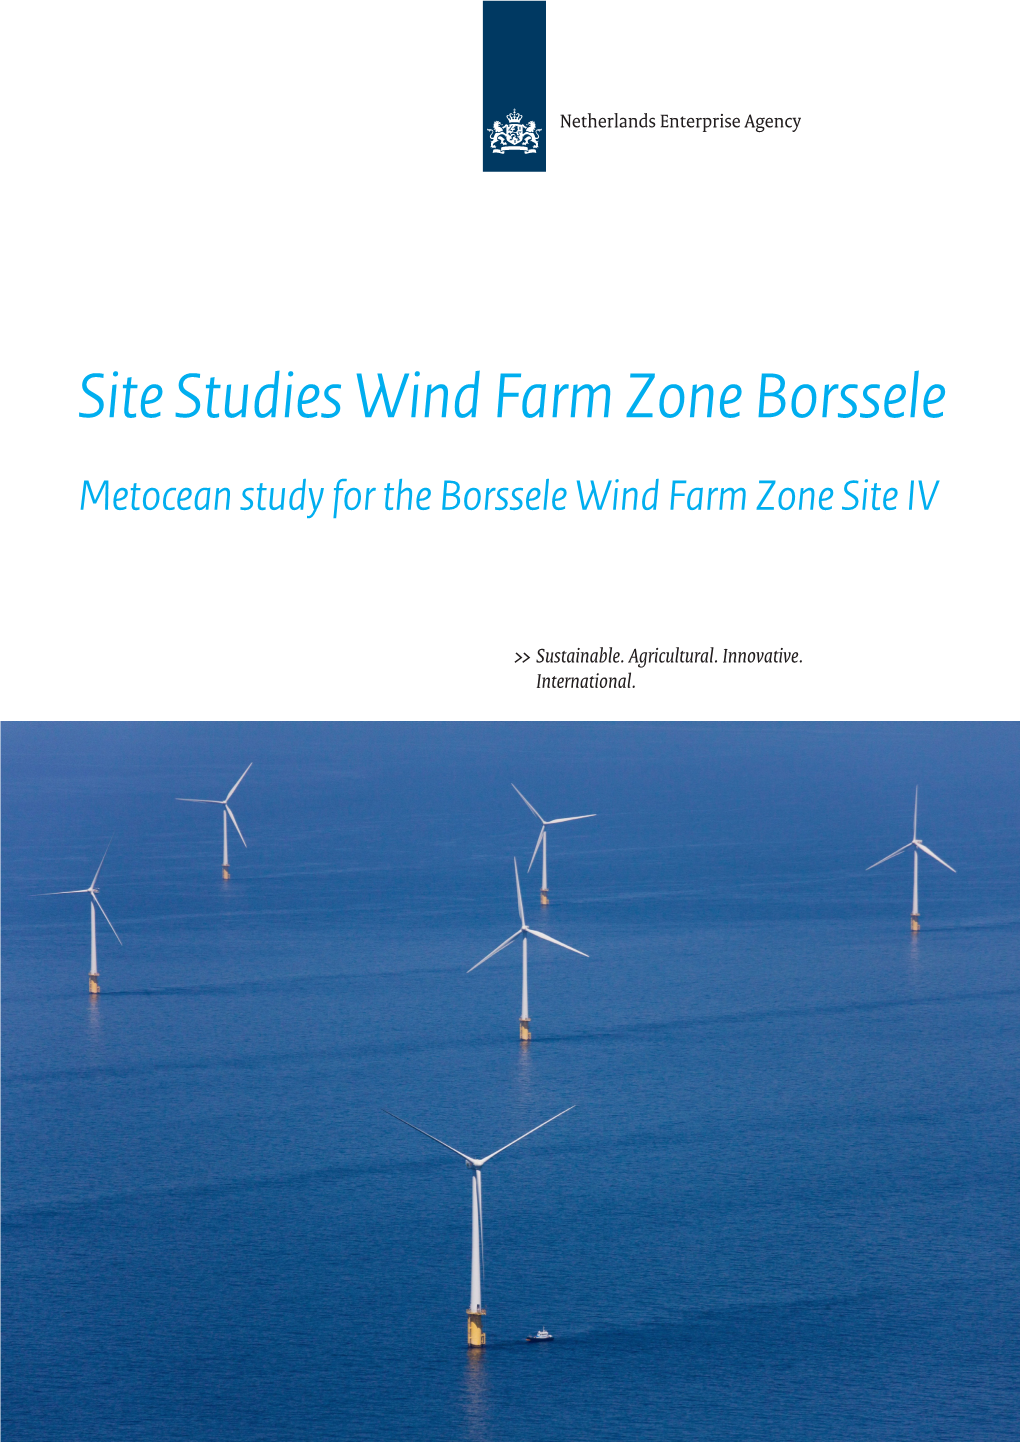 Site Studies Wind Farm Zone Borssele Metocean Study for the Borssele Wind Farm Zone Site IV Author Deltares